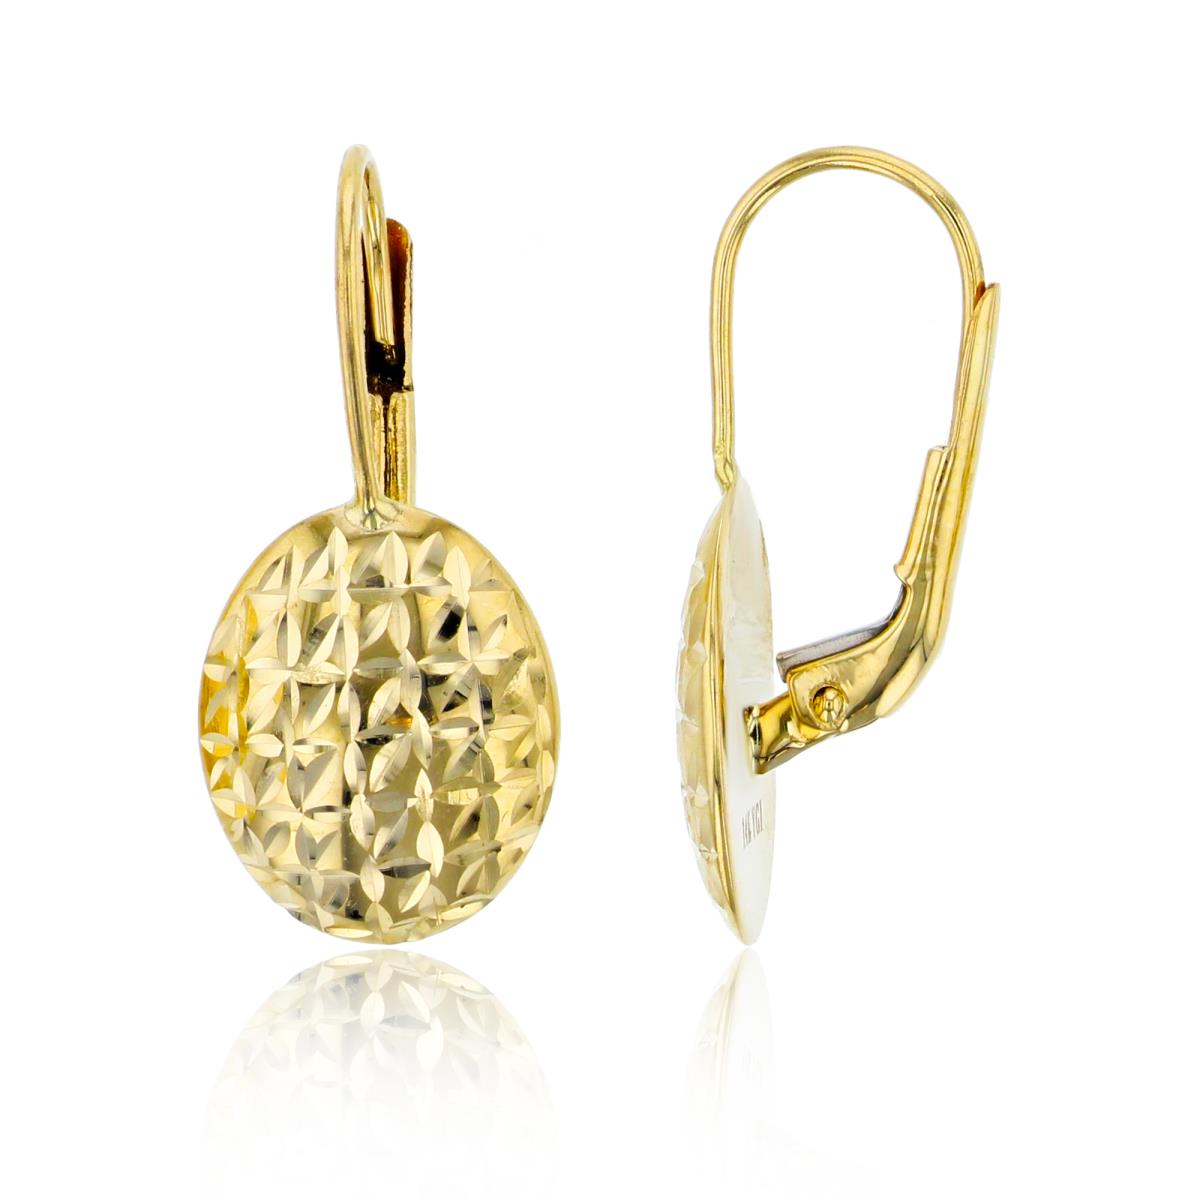 10K Yellow Gold Diamond Cut Oval Leverback Earring